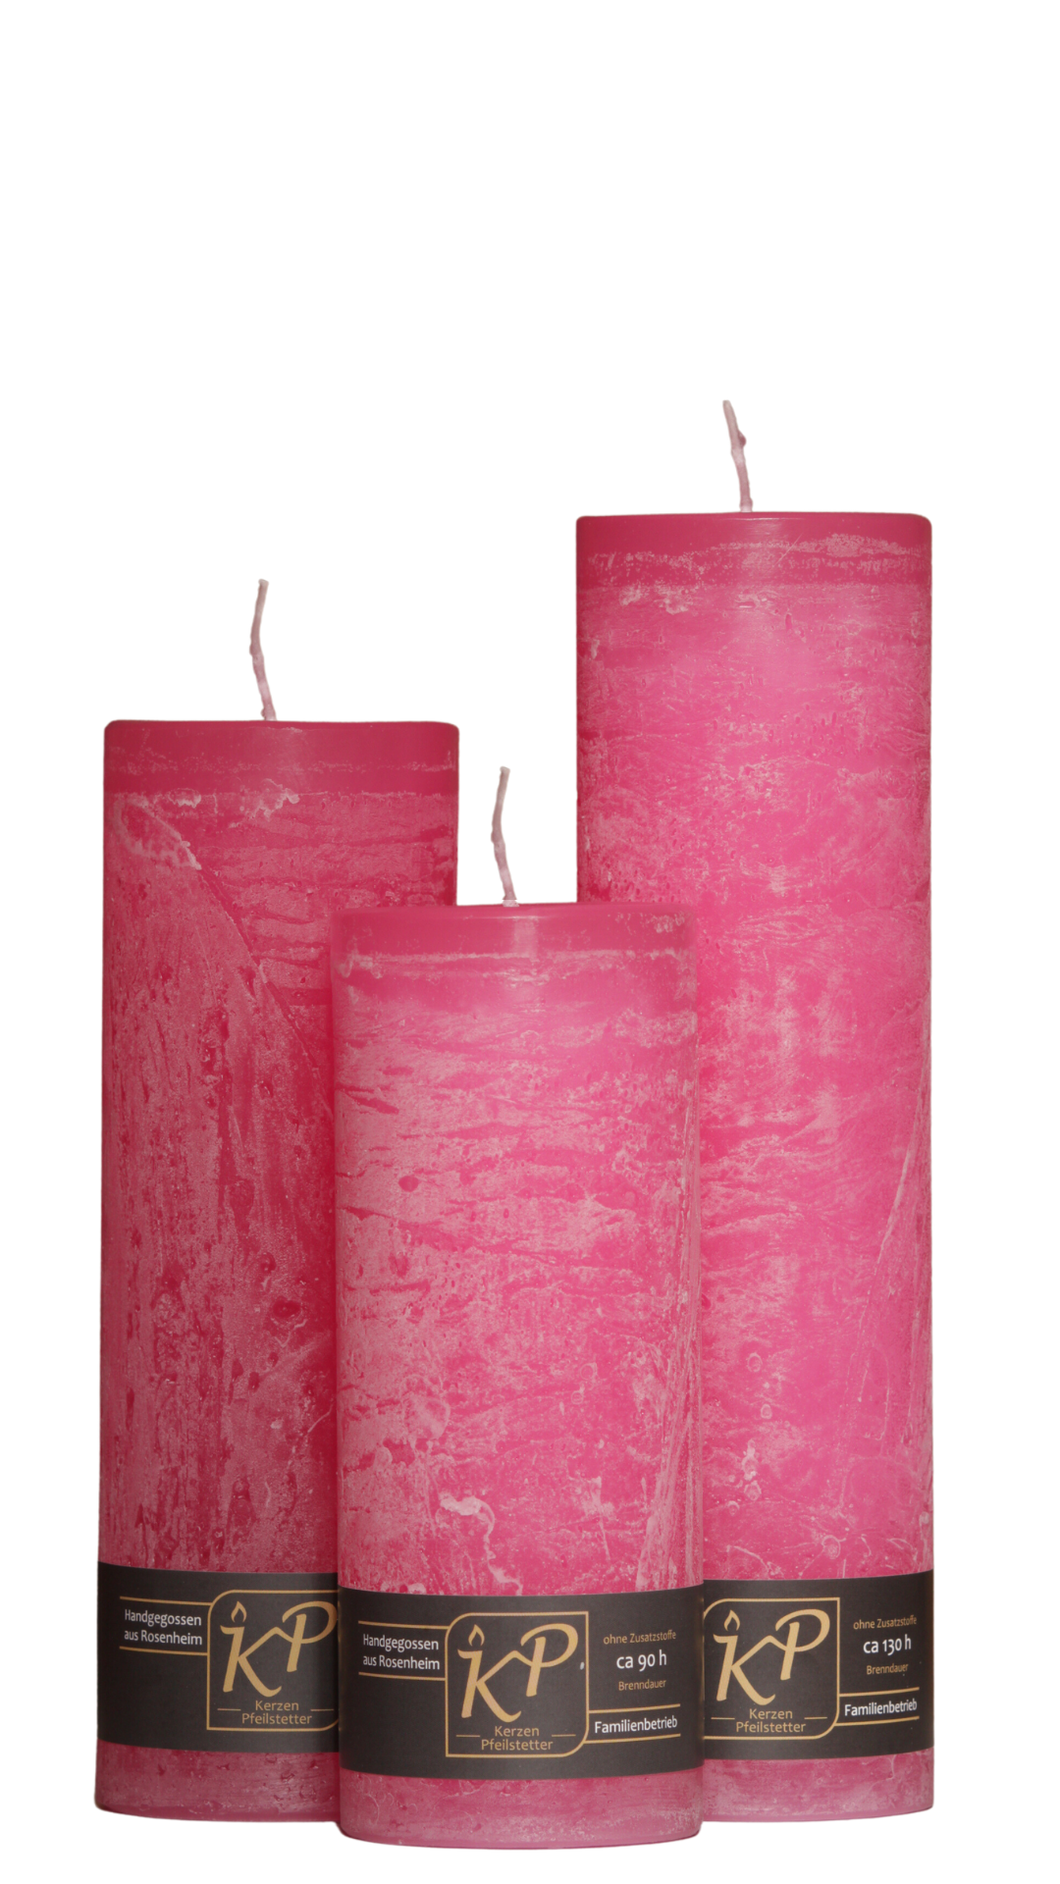 Dalina flower candle | pink | ~ 130h burning time